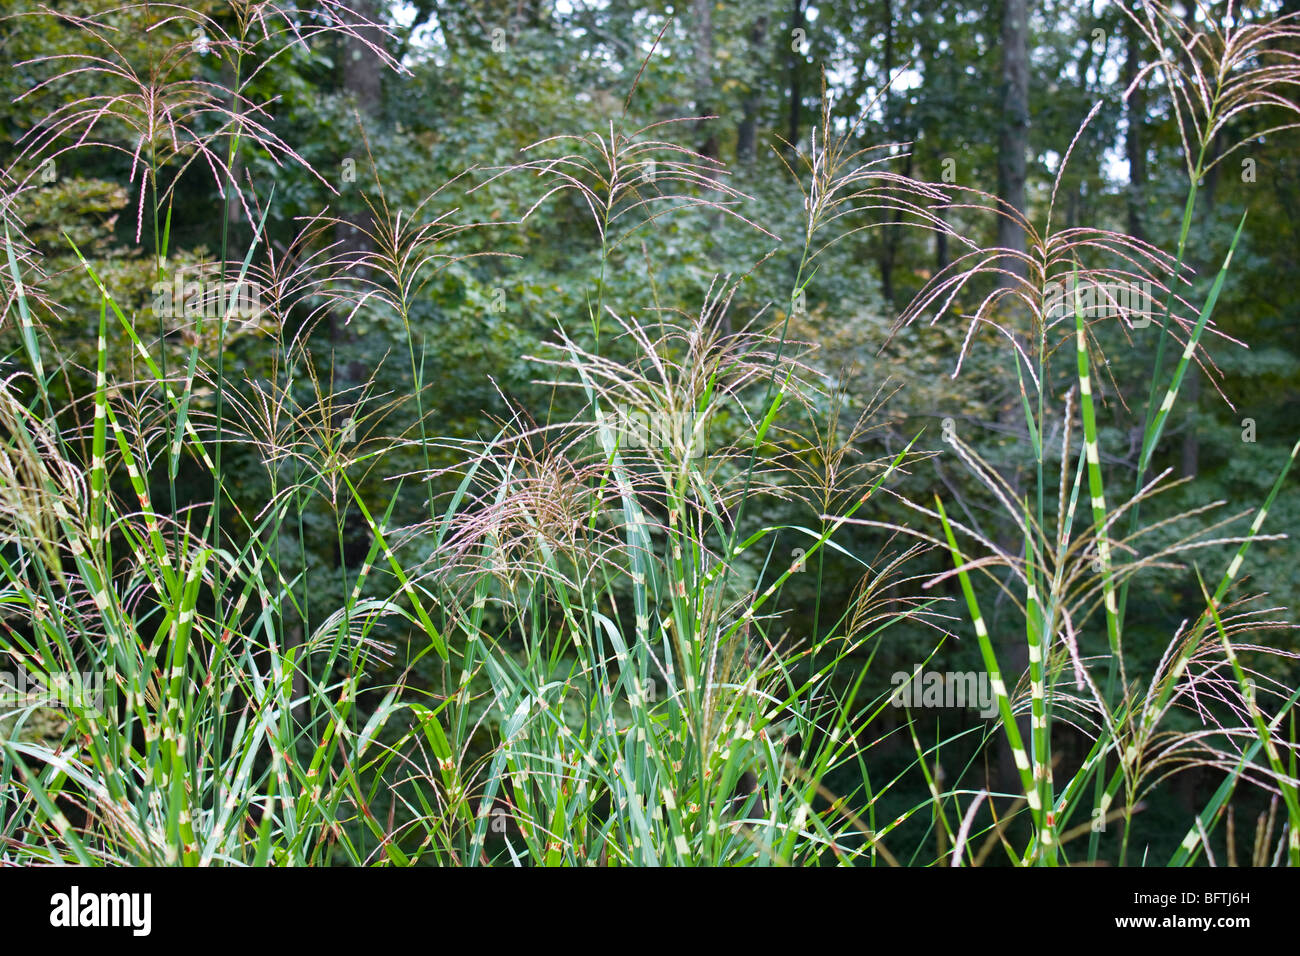 akn 1067R1 Ornamental Zebra Grass with plumage Stock Photo